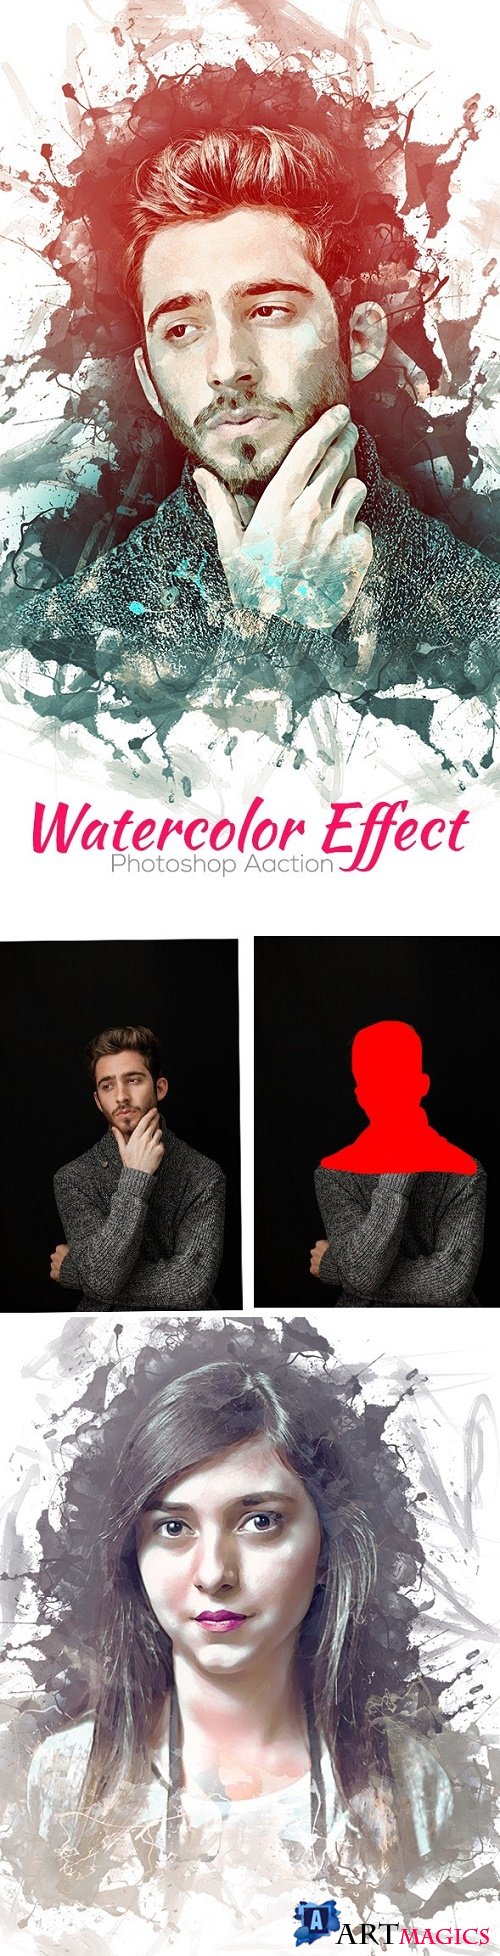 Watercolor Effect Photoshop Action 24740269